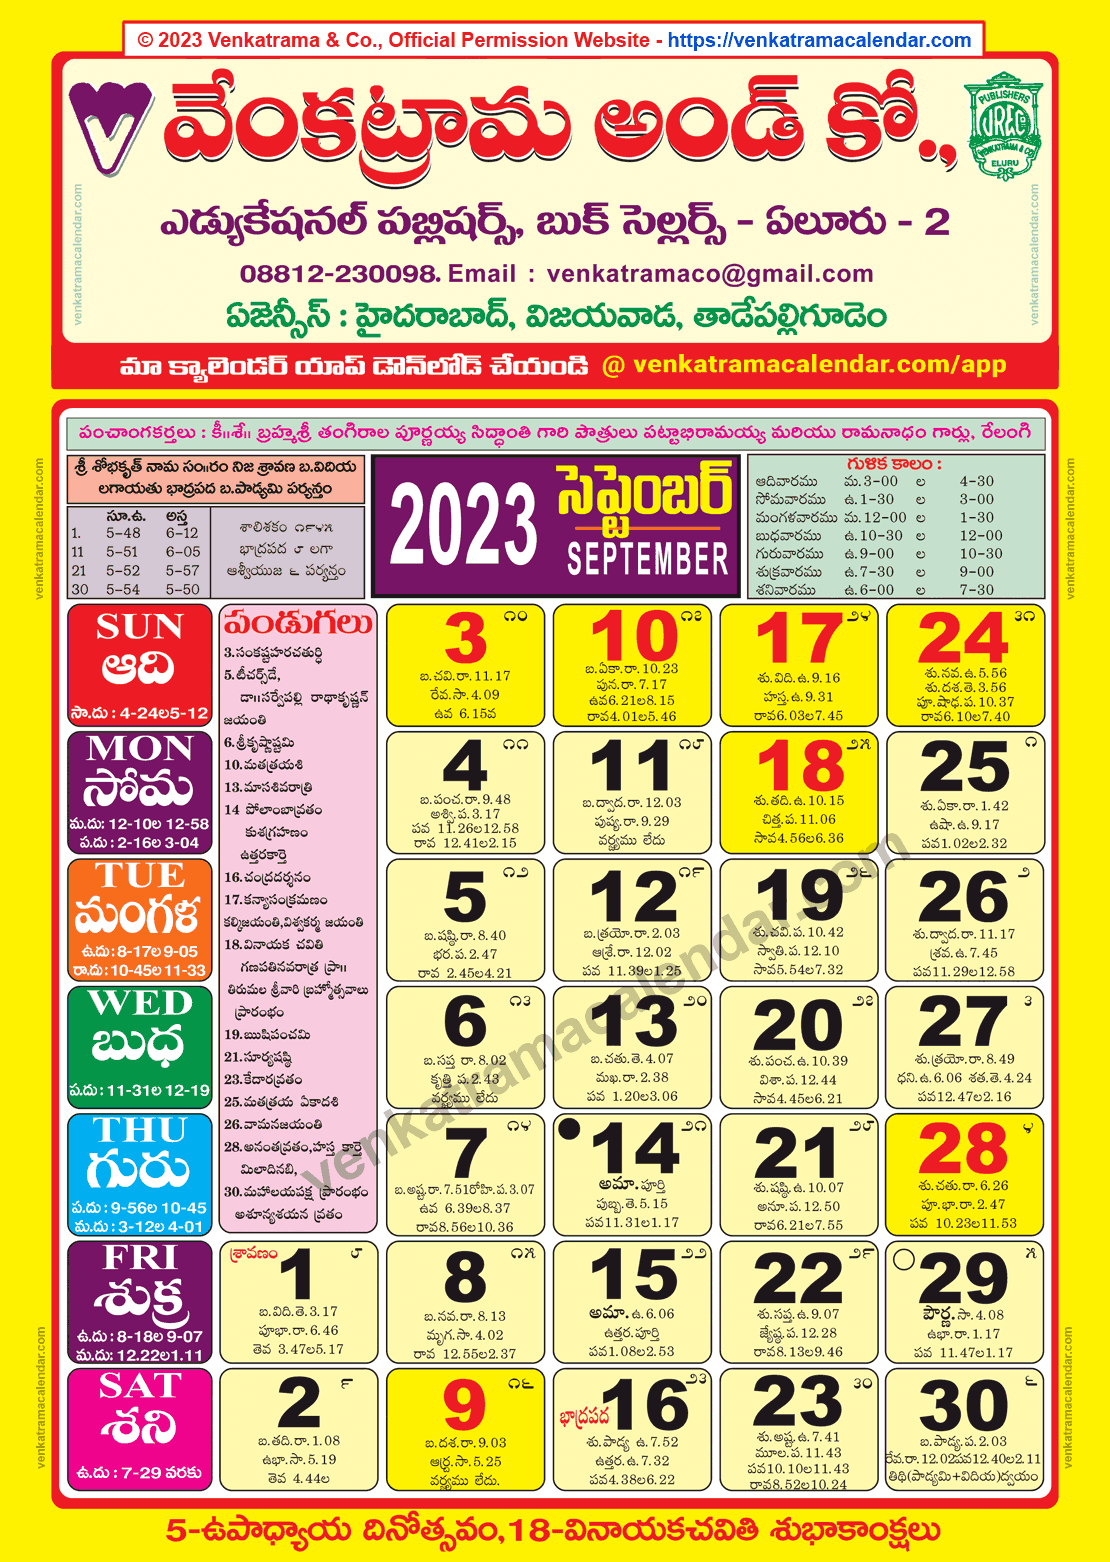 Venkatrama Calendar 2023 September